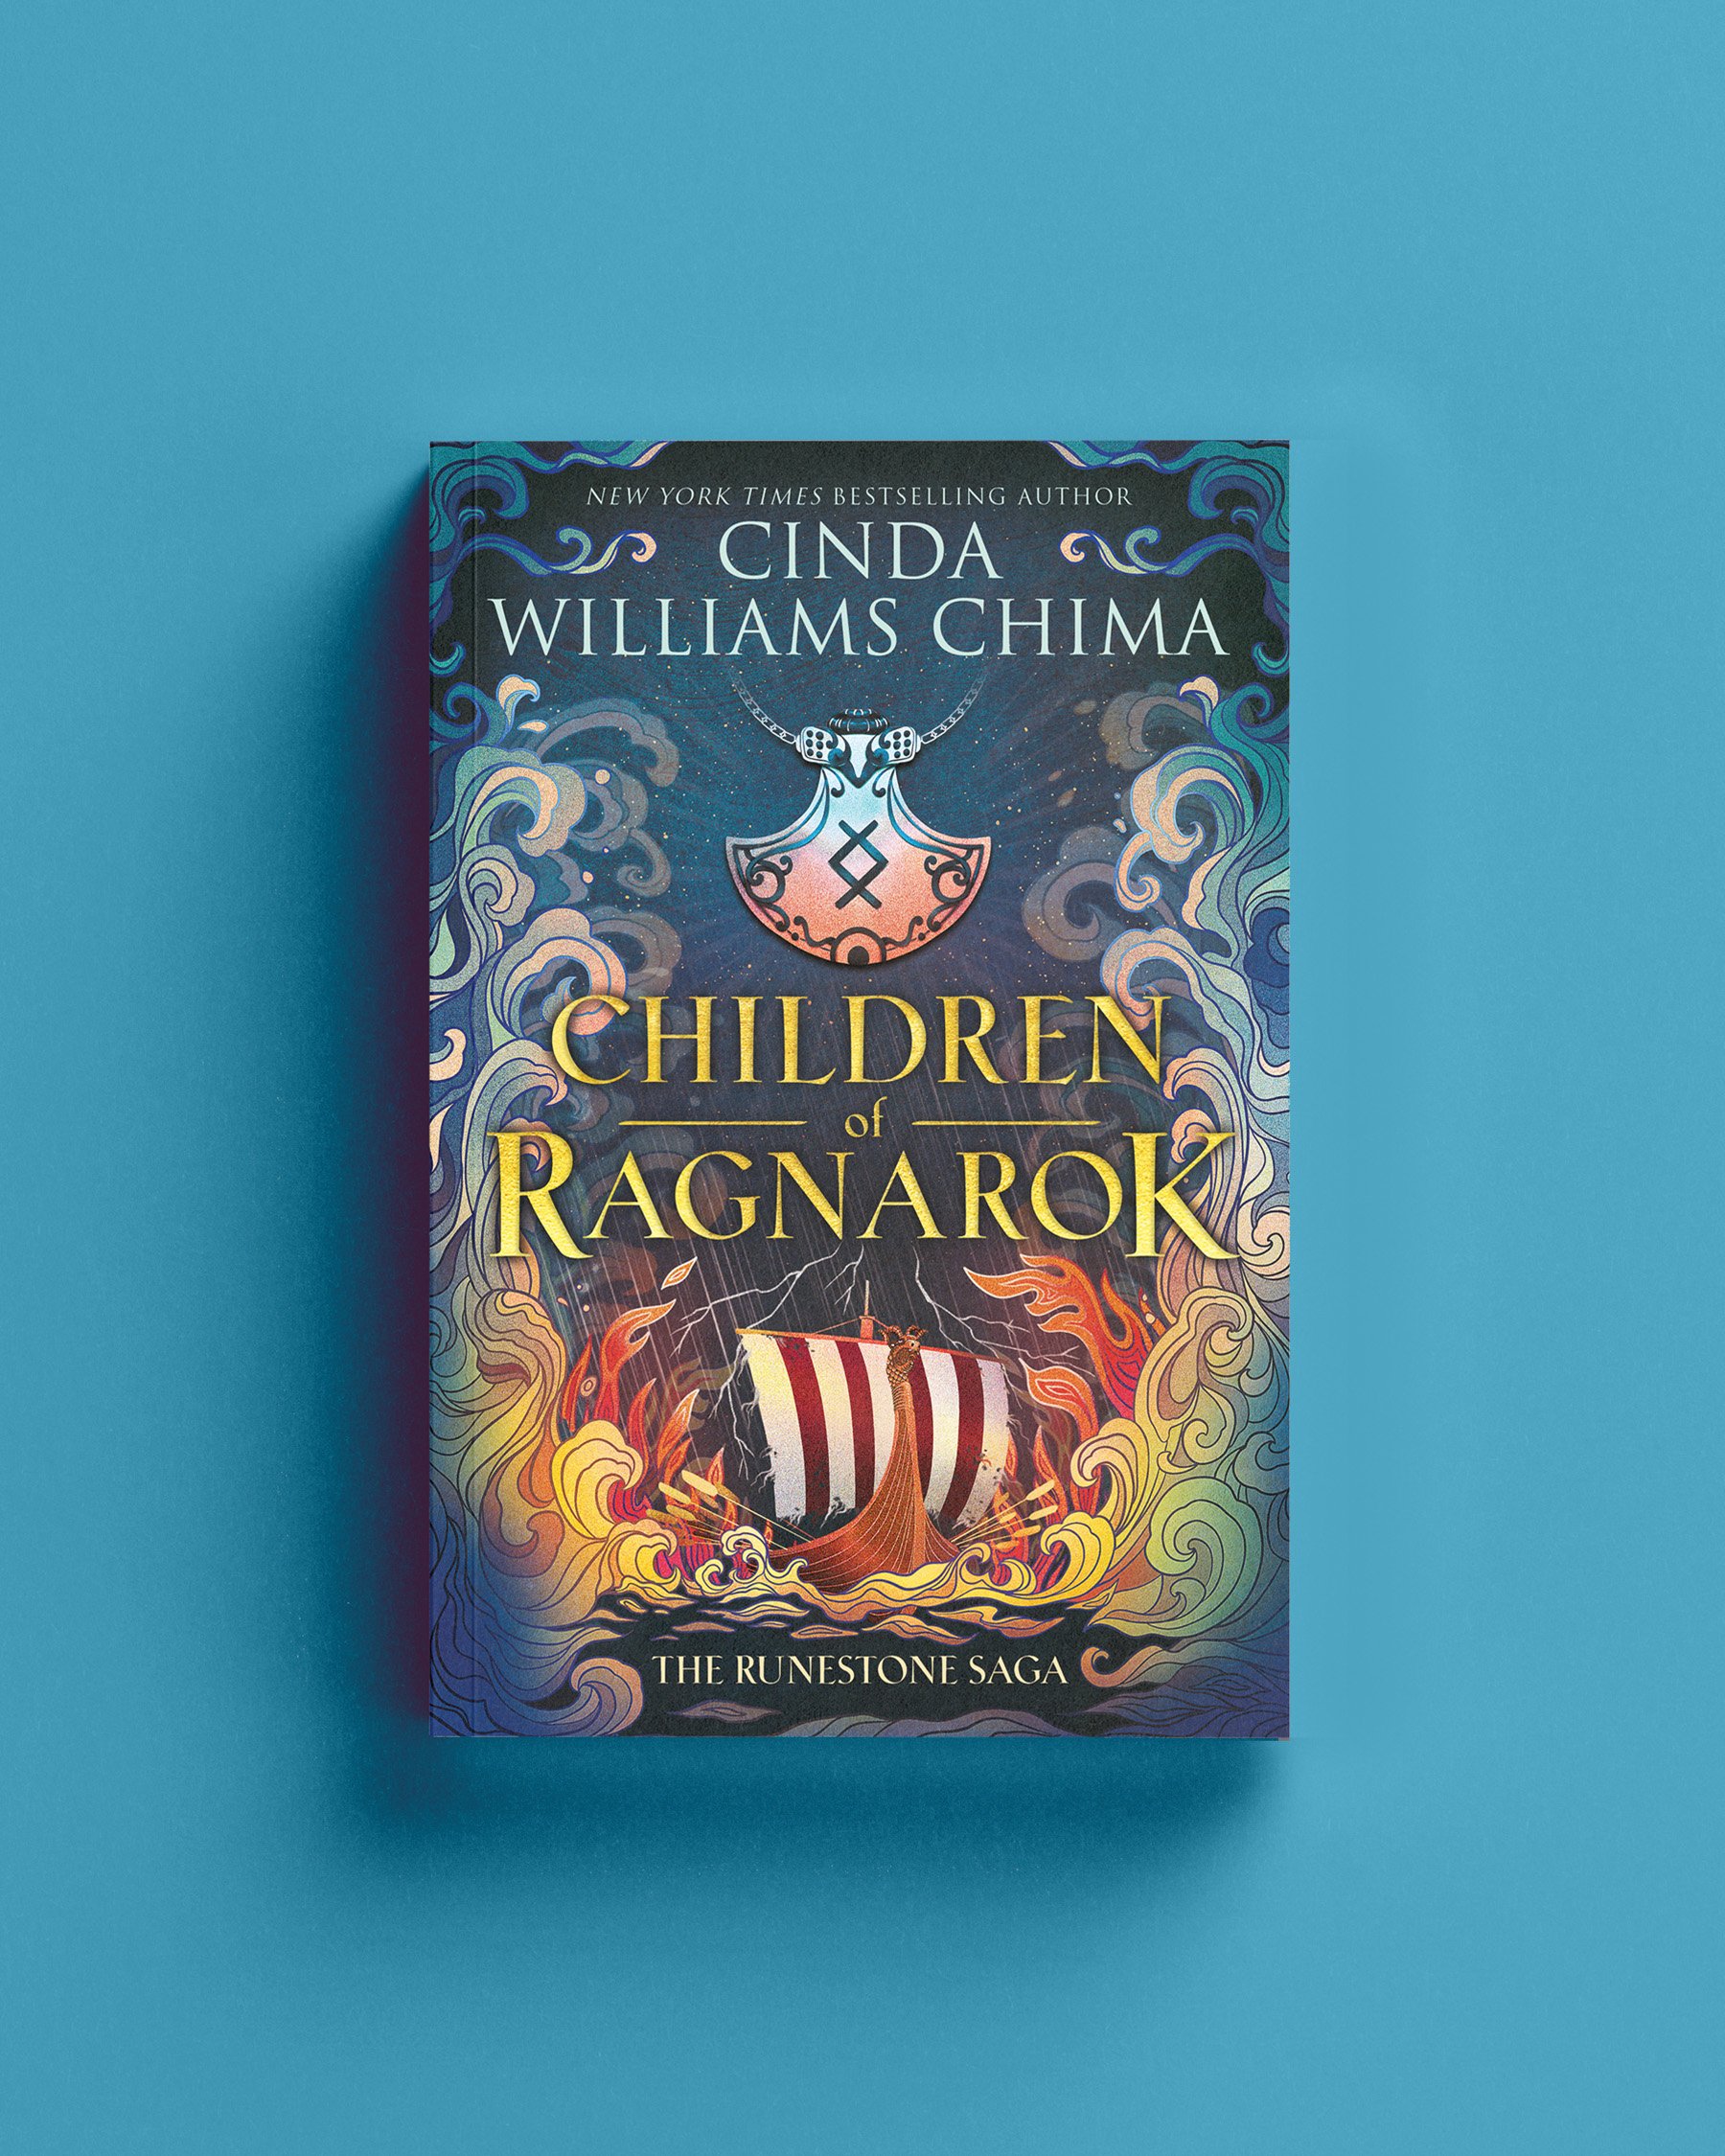 Cover for "Children of Ragnarok" (Runestone Saga #1) by Cinda Williams Chima